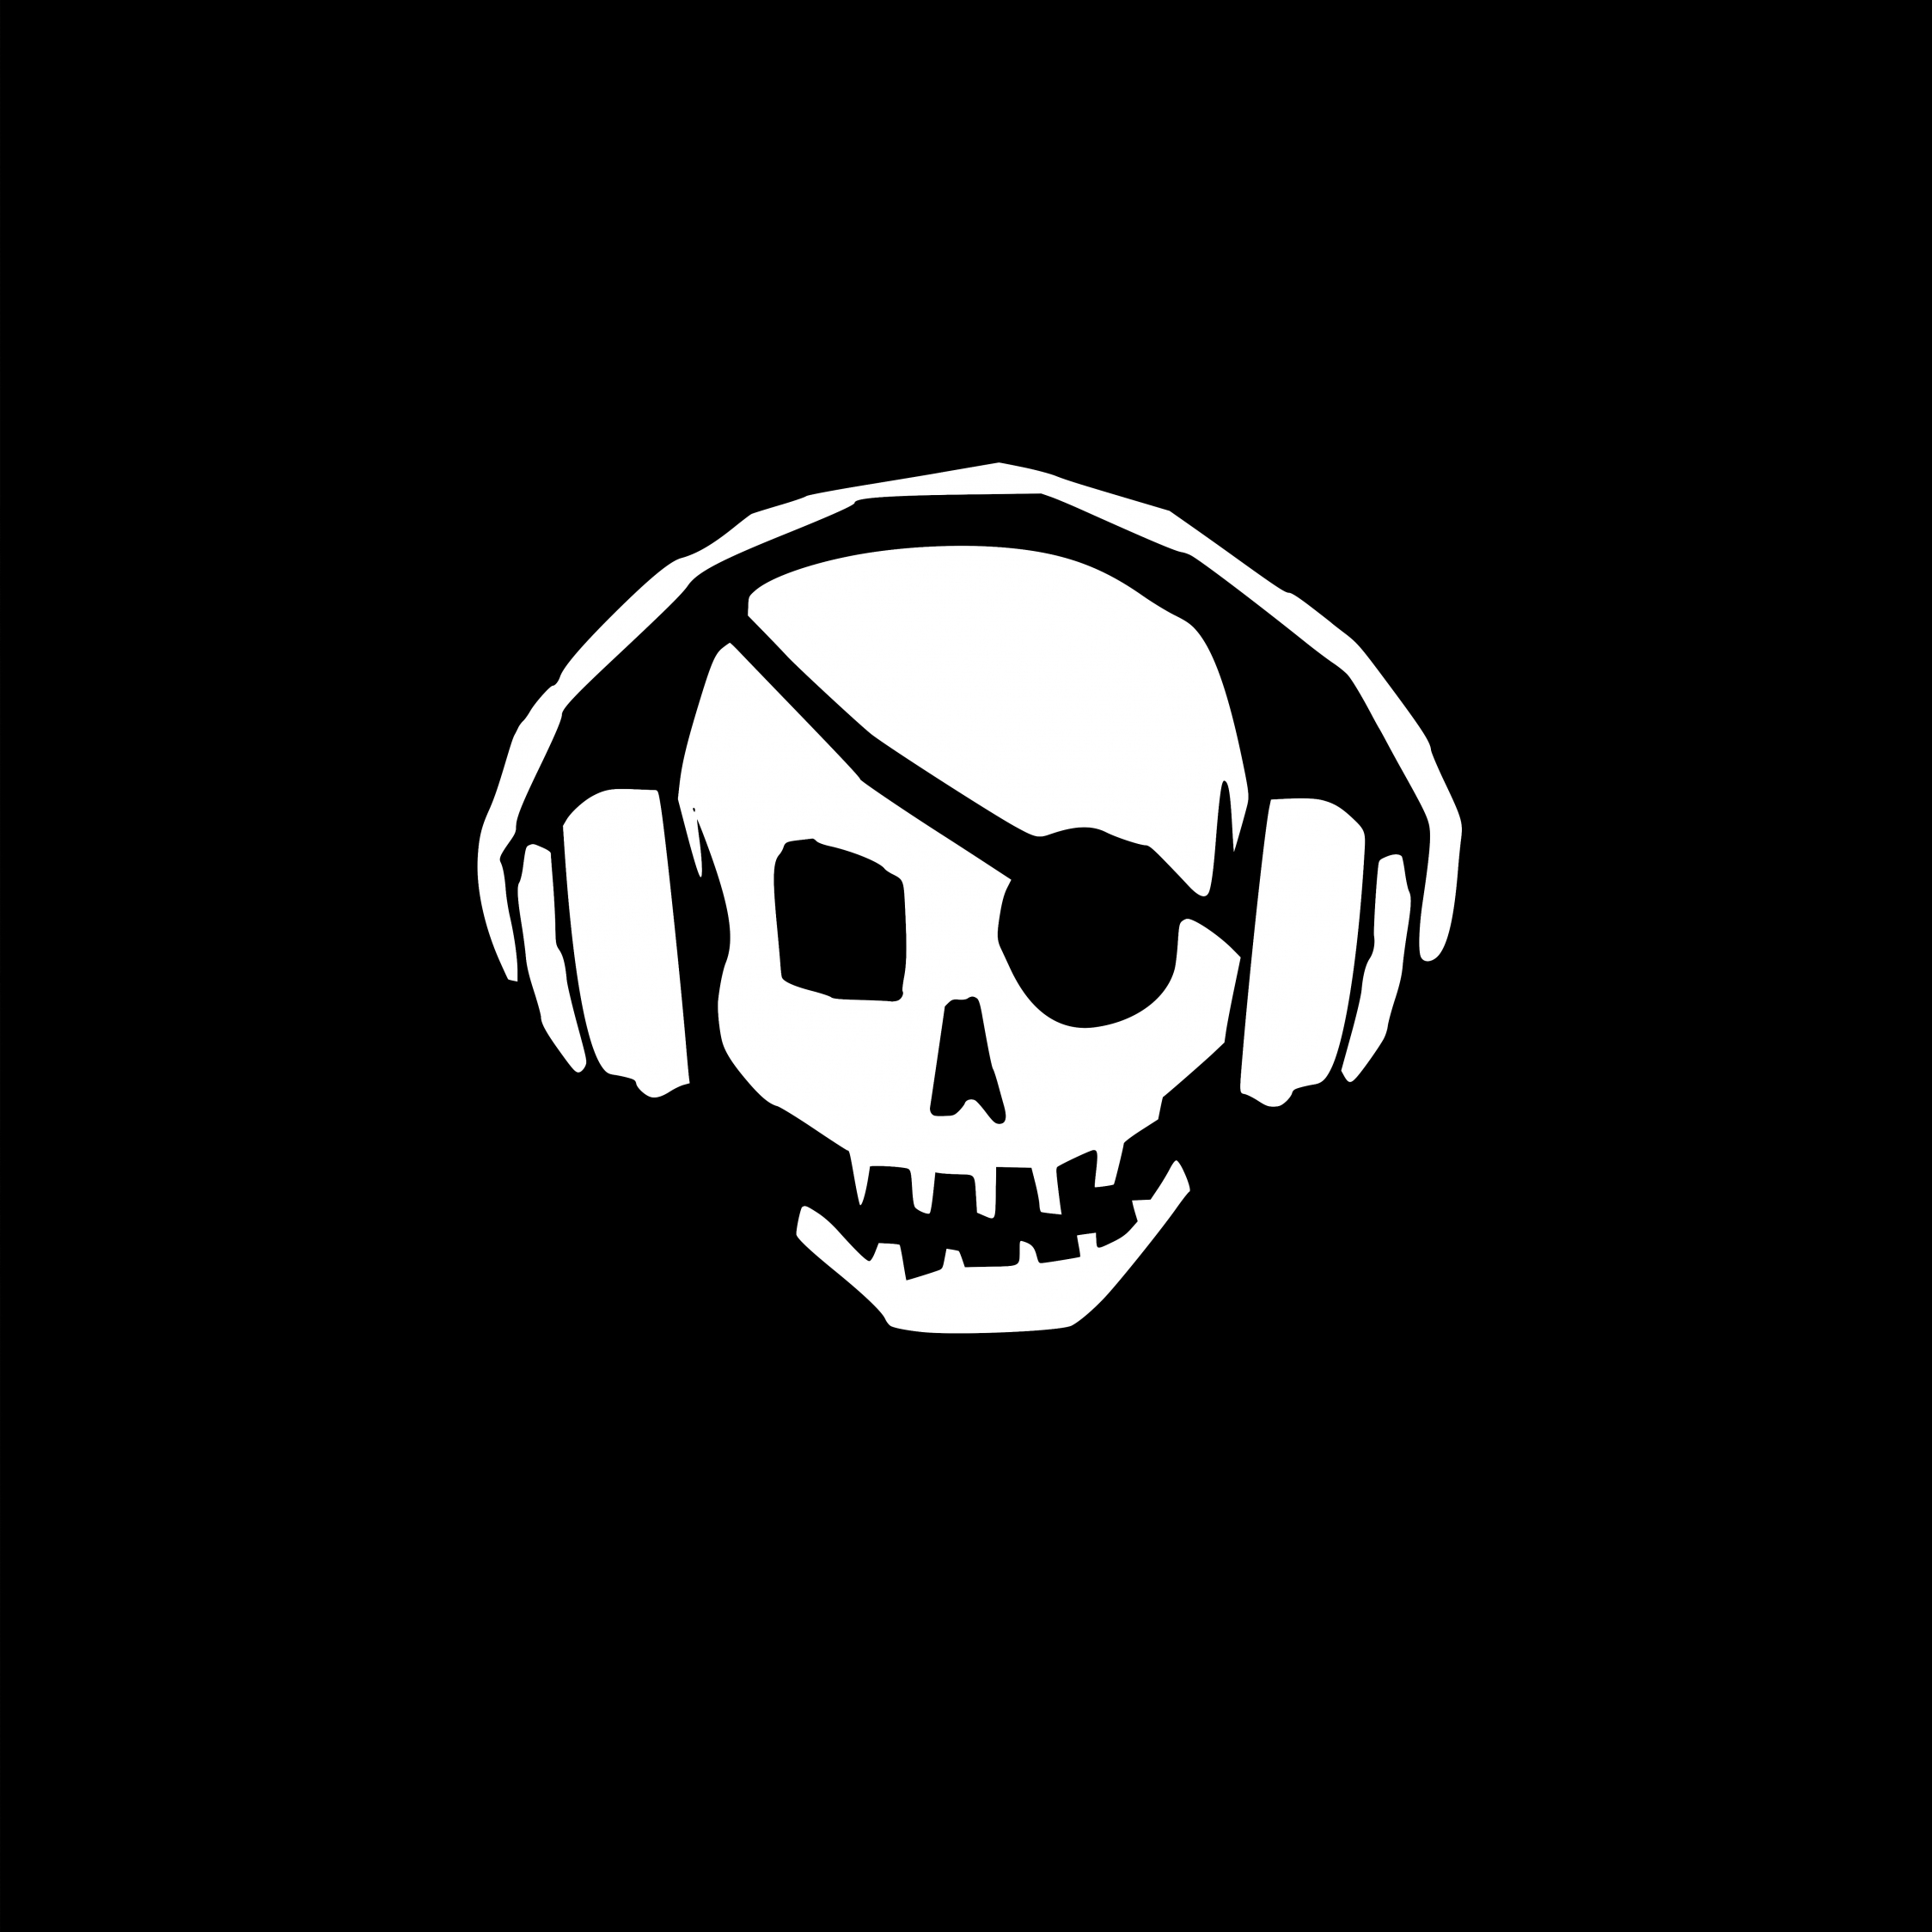 3 skulls music downloads